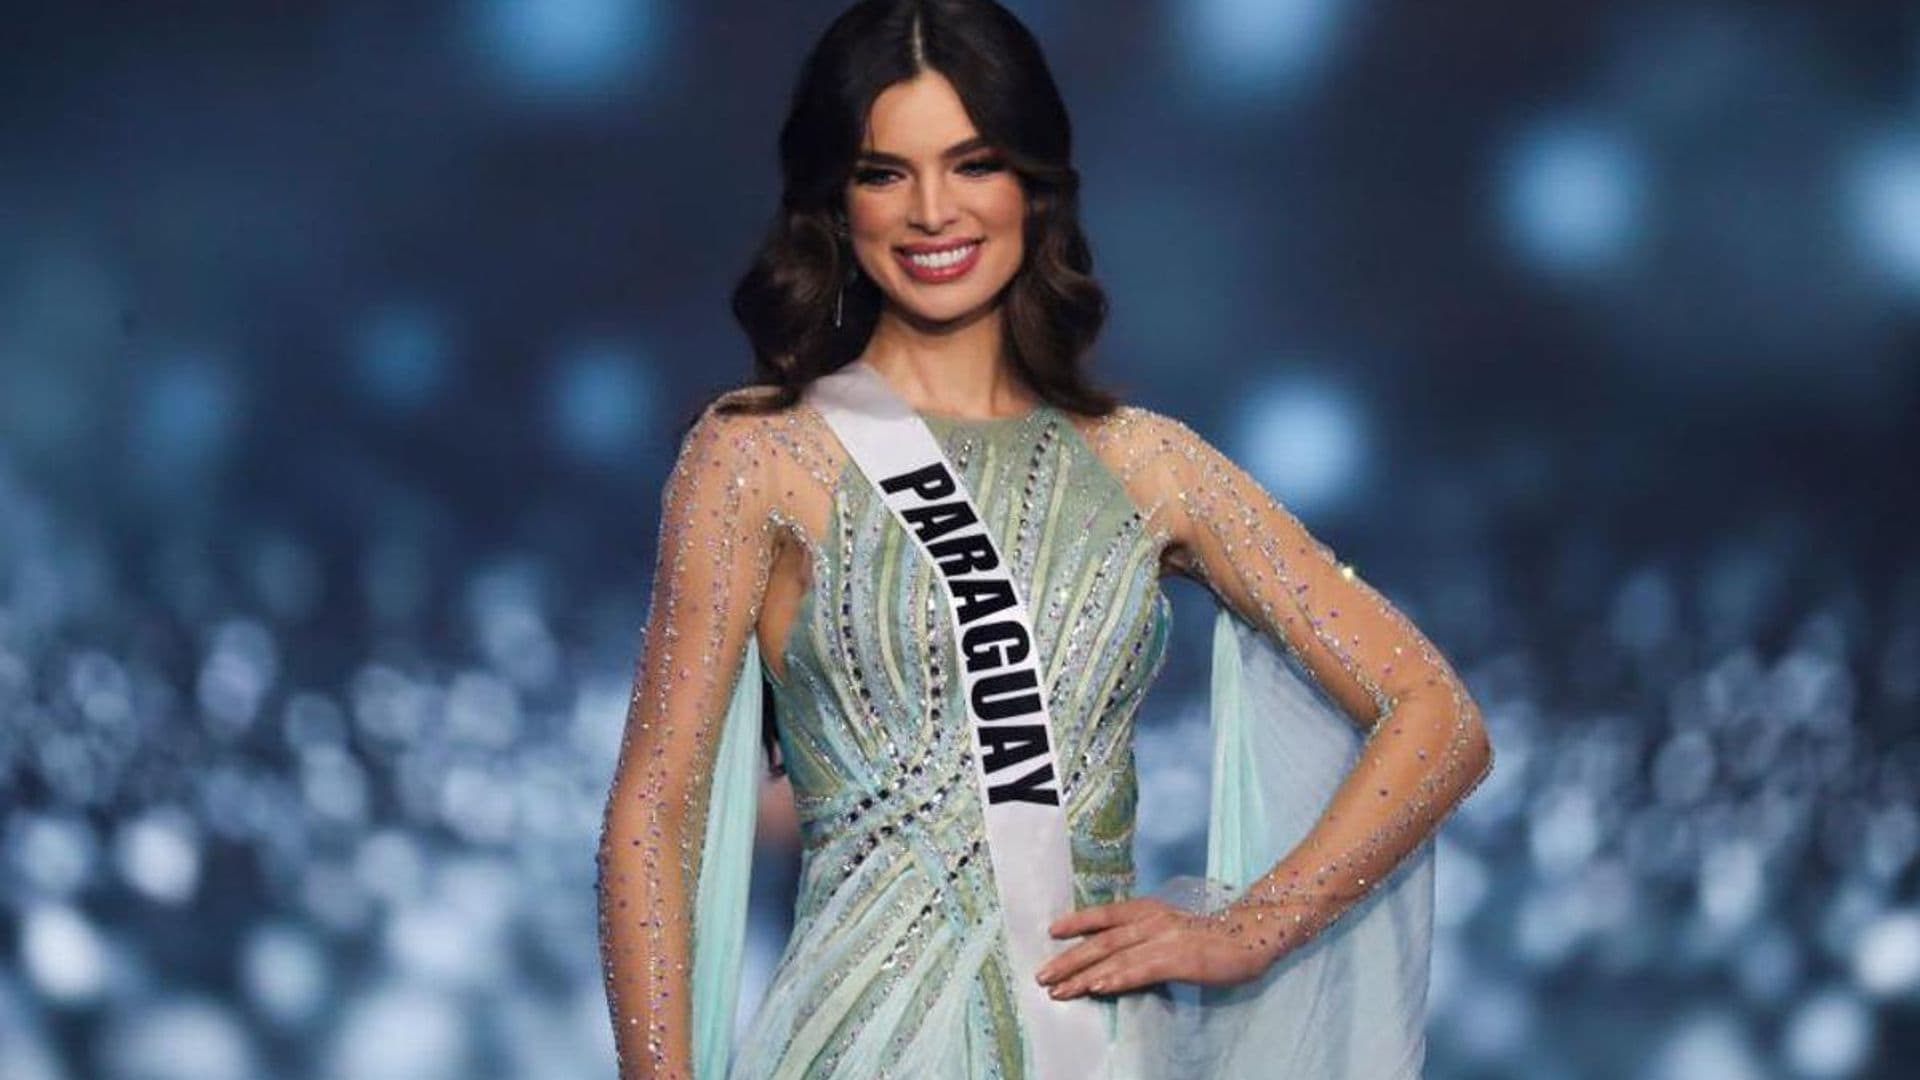 Exclusive: Nadia Ferreira joins Miss Universe 2023 jury panel